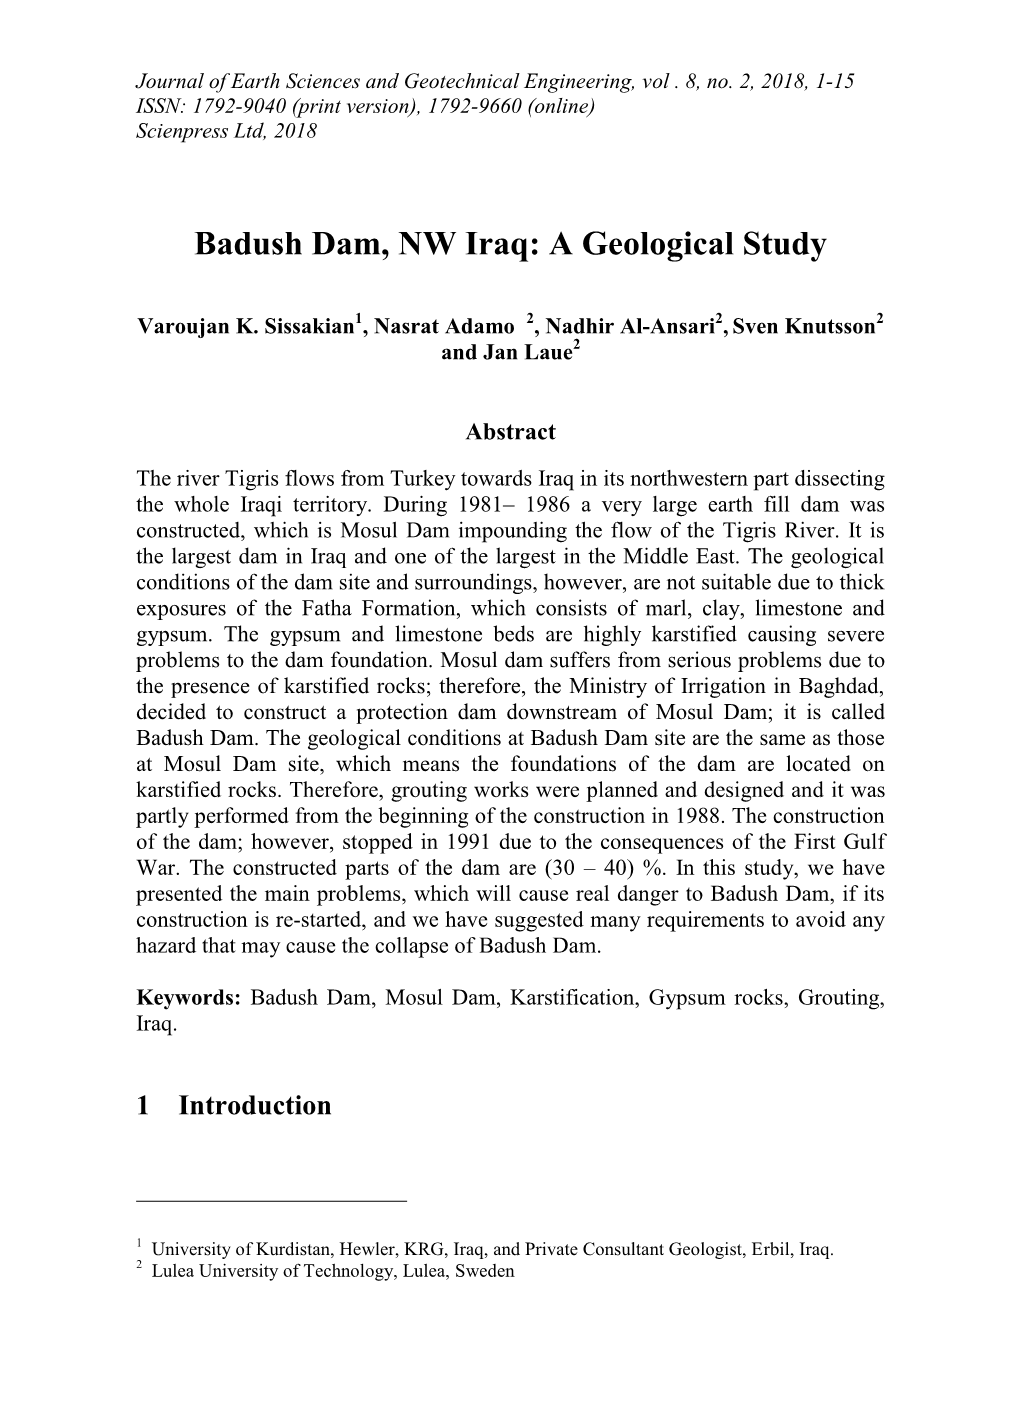 Badush Dam, NW Iraq: a Geological Study